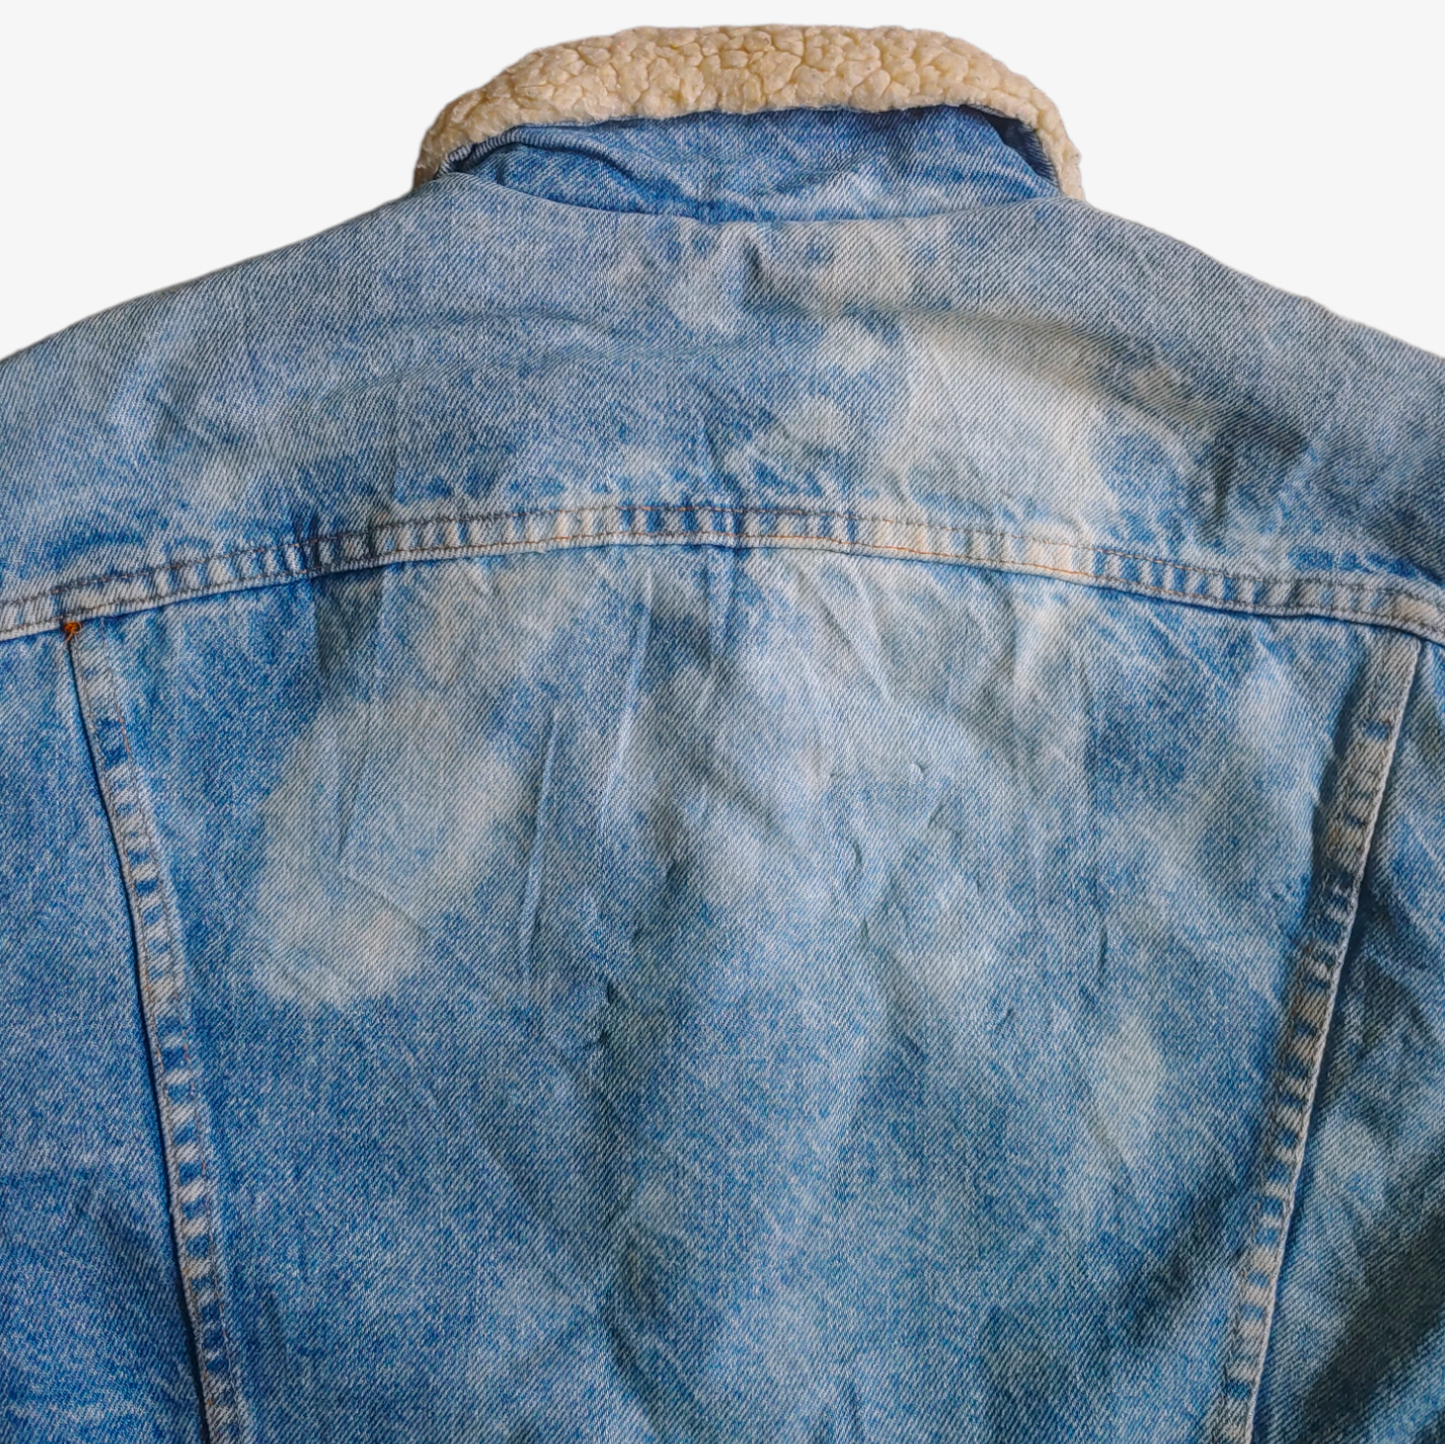 Vintage 1970s Levis Blue Denim Orange Tab Jacket With Fur Collar & Lining Back - Casspios Dream